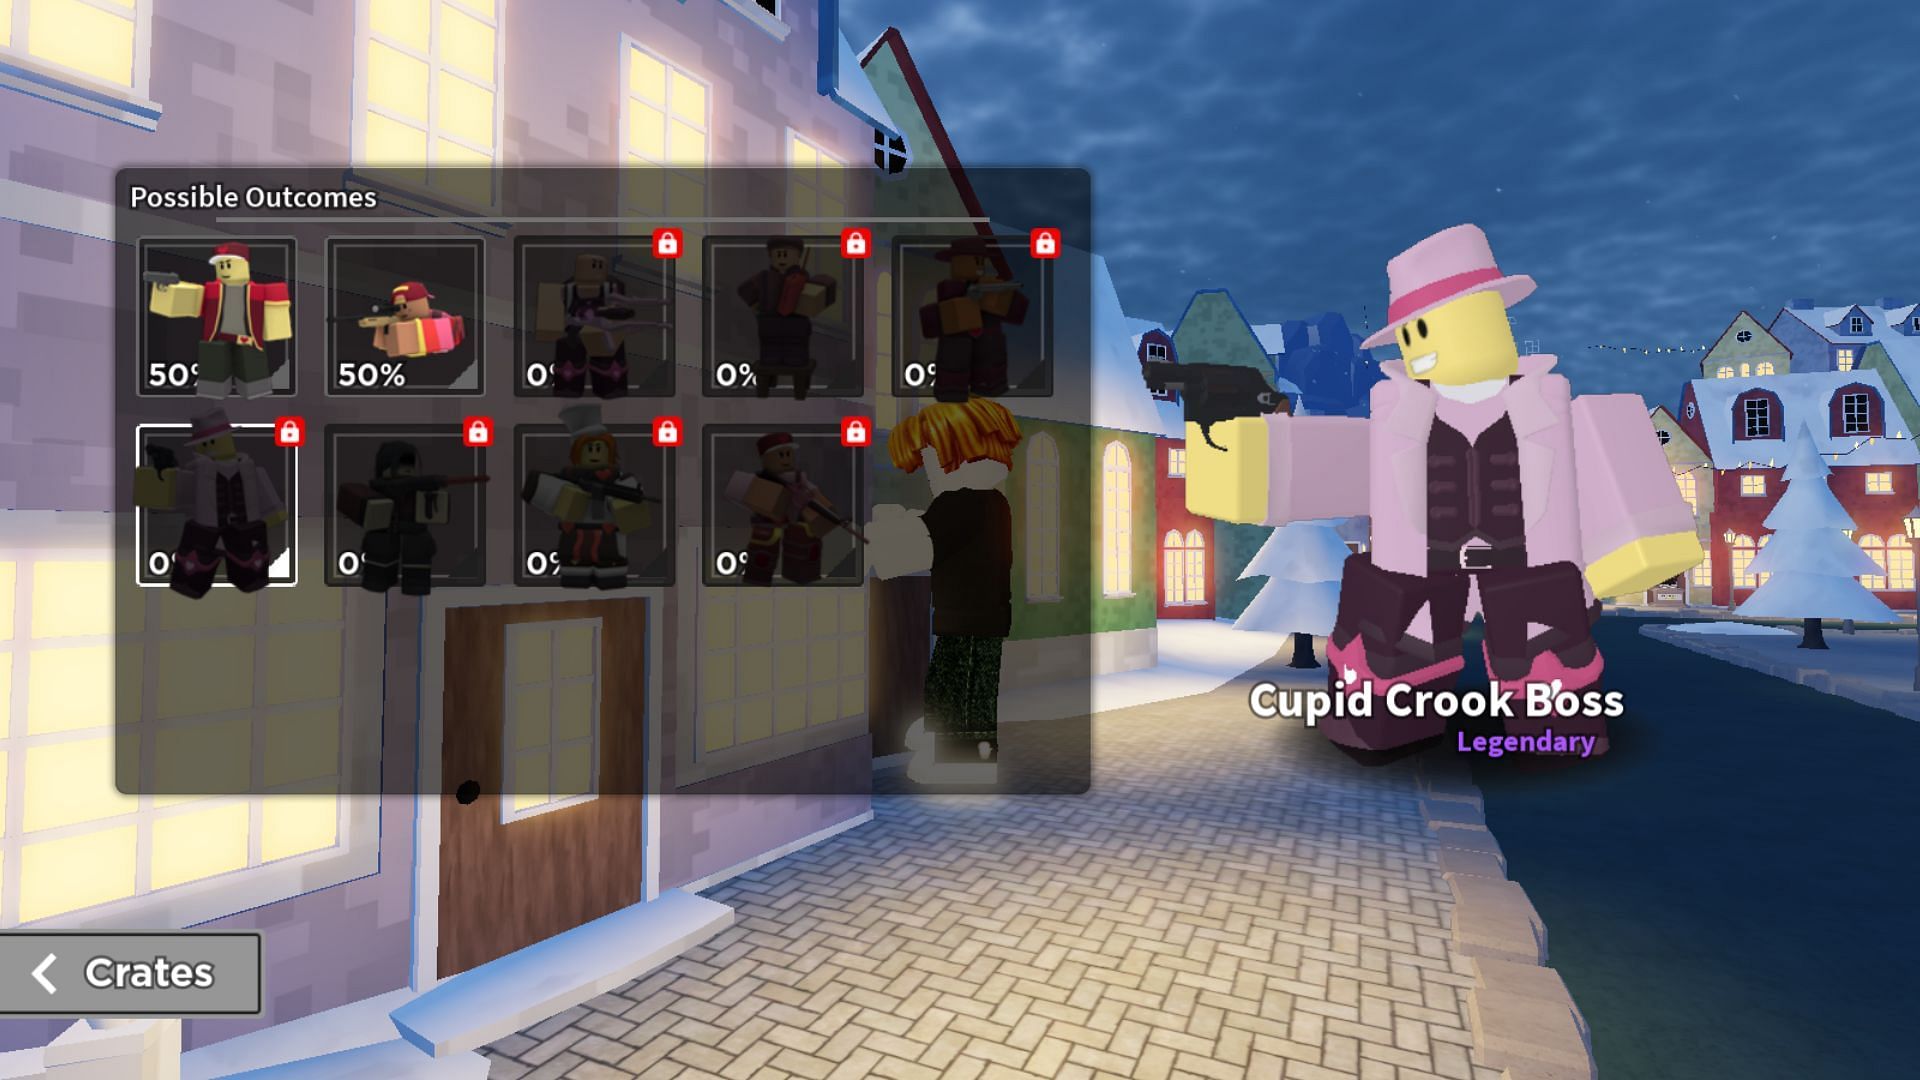 Cupid Crook Boss from Lovely Crate in Tower Defense Simulator (Roblox||Sportskeeda)